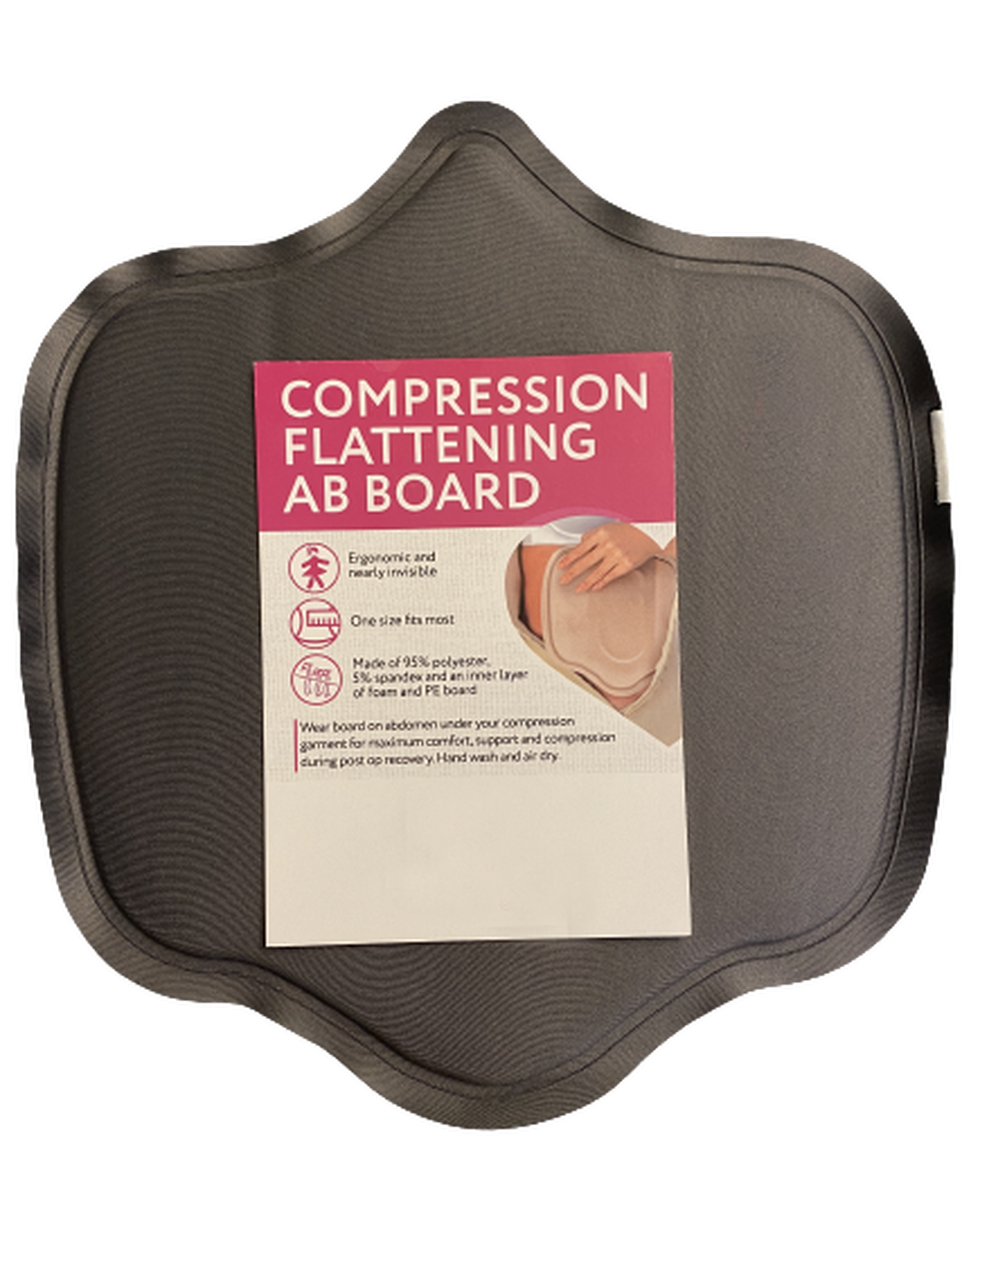 Bombshell Booty Pillow 3 Pack LiPo Foam LiPo Lumbar Molder Foam Board Provides Abdominal compression,comfort Post Liposuction BBL Surgery Faja Board